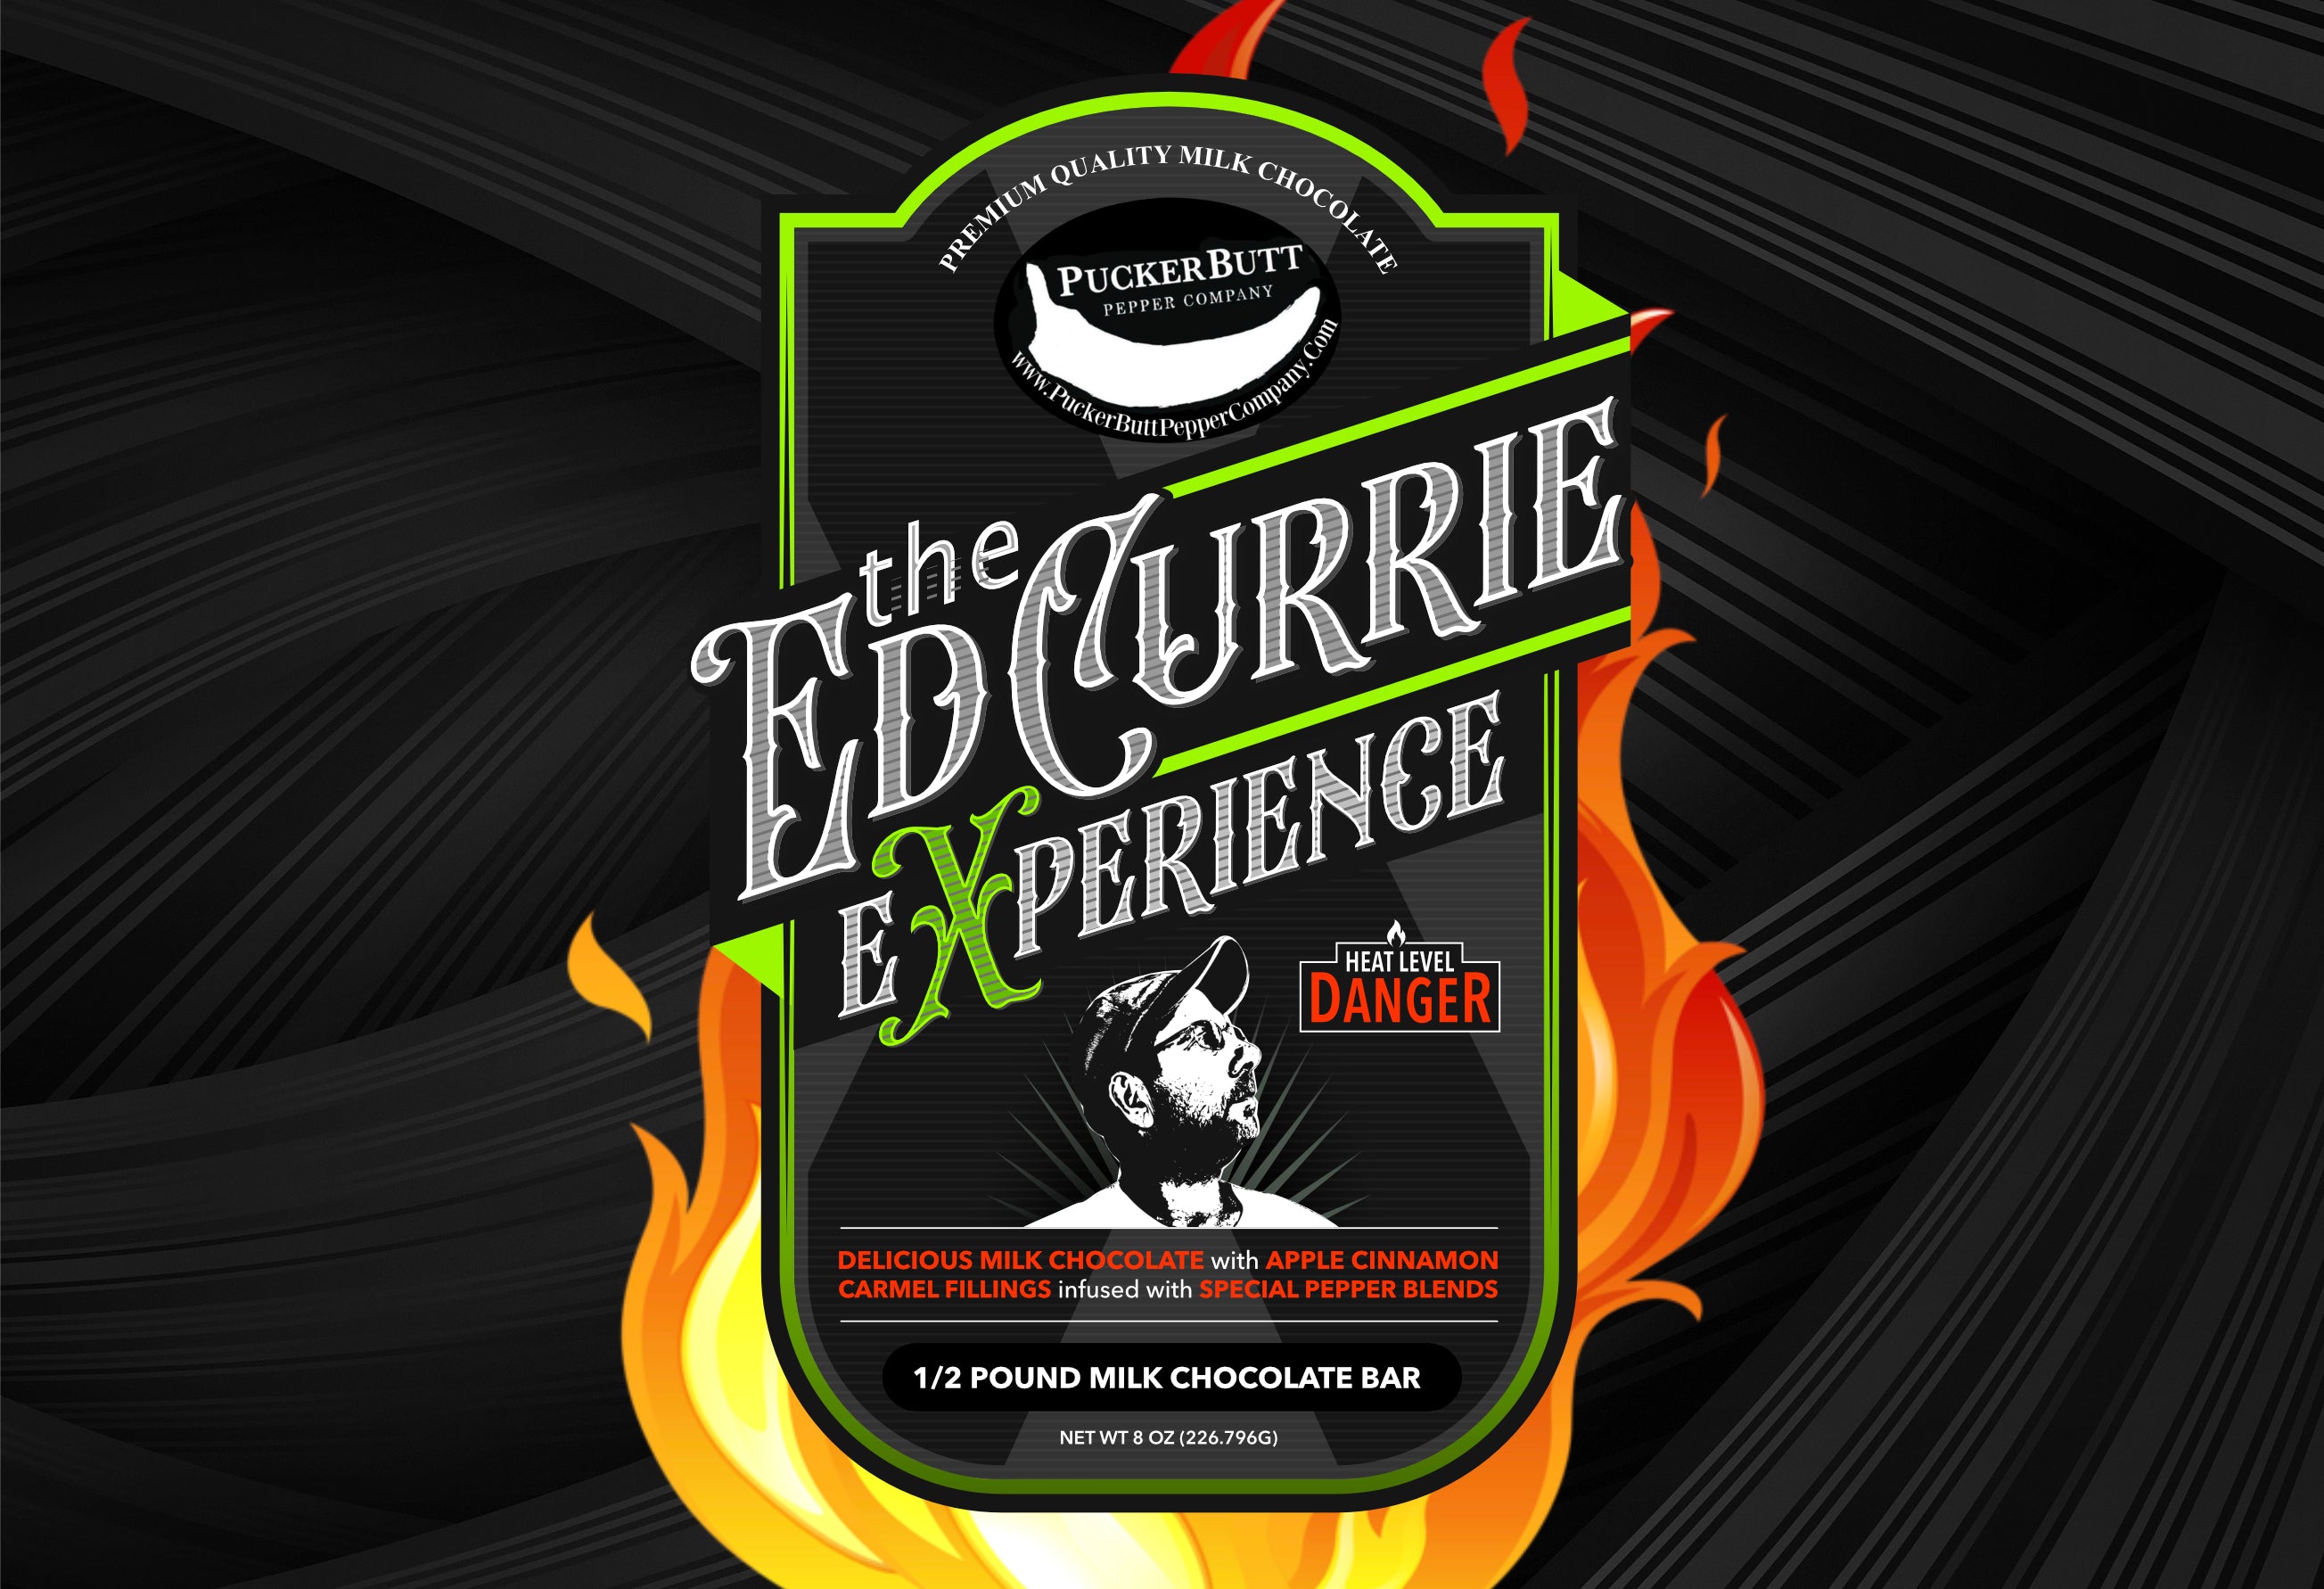 The Ed Currie eXperience Milk Chocolate Bar